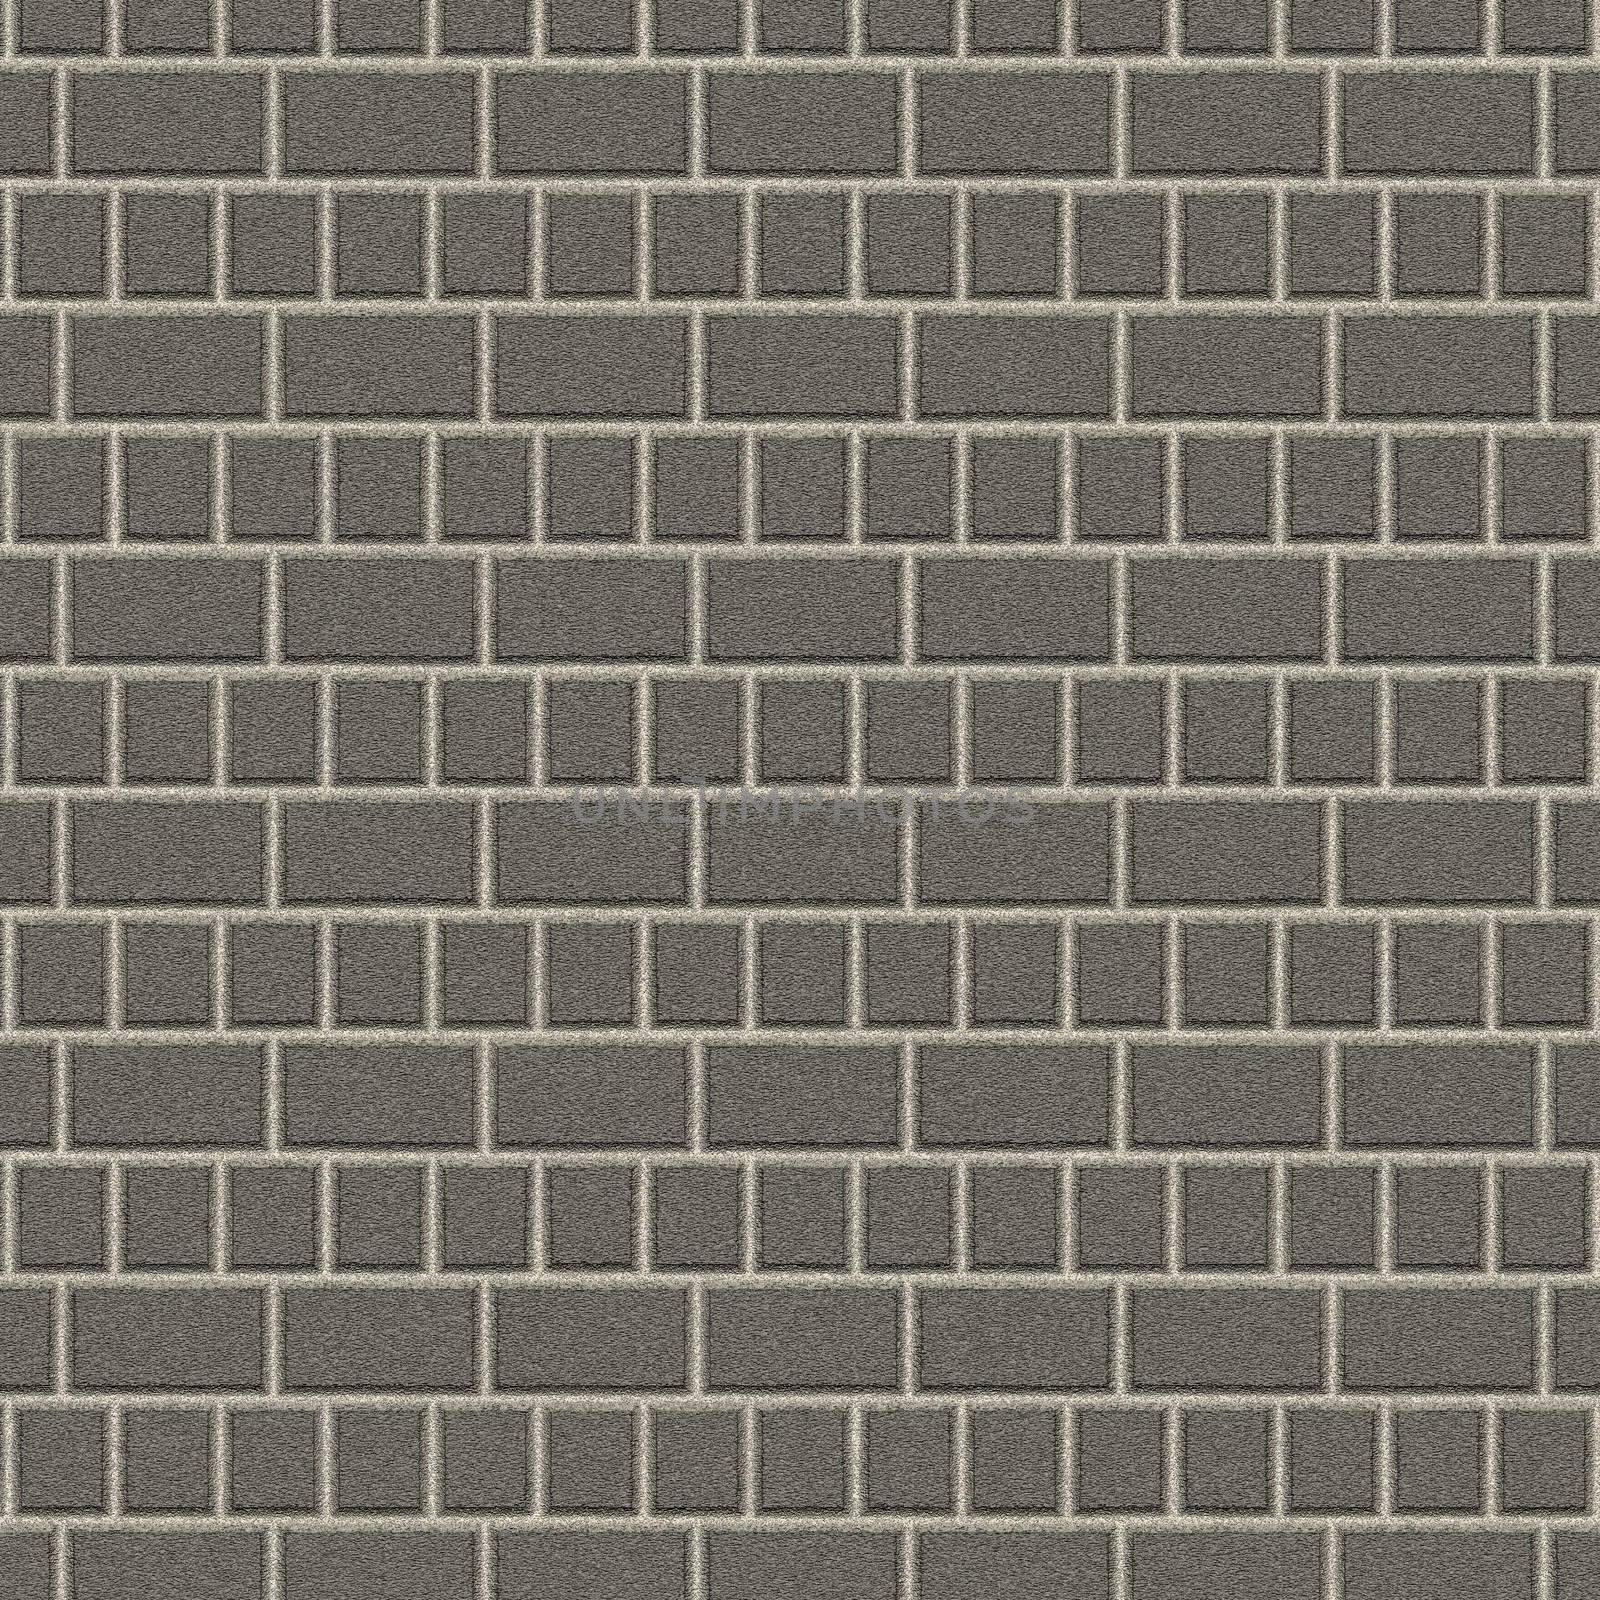 pattern from concrete bricks by sfinks